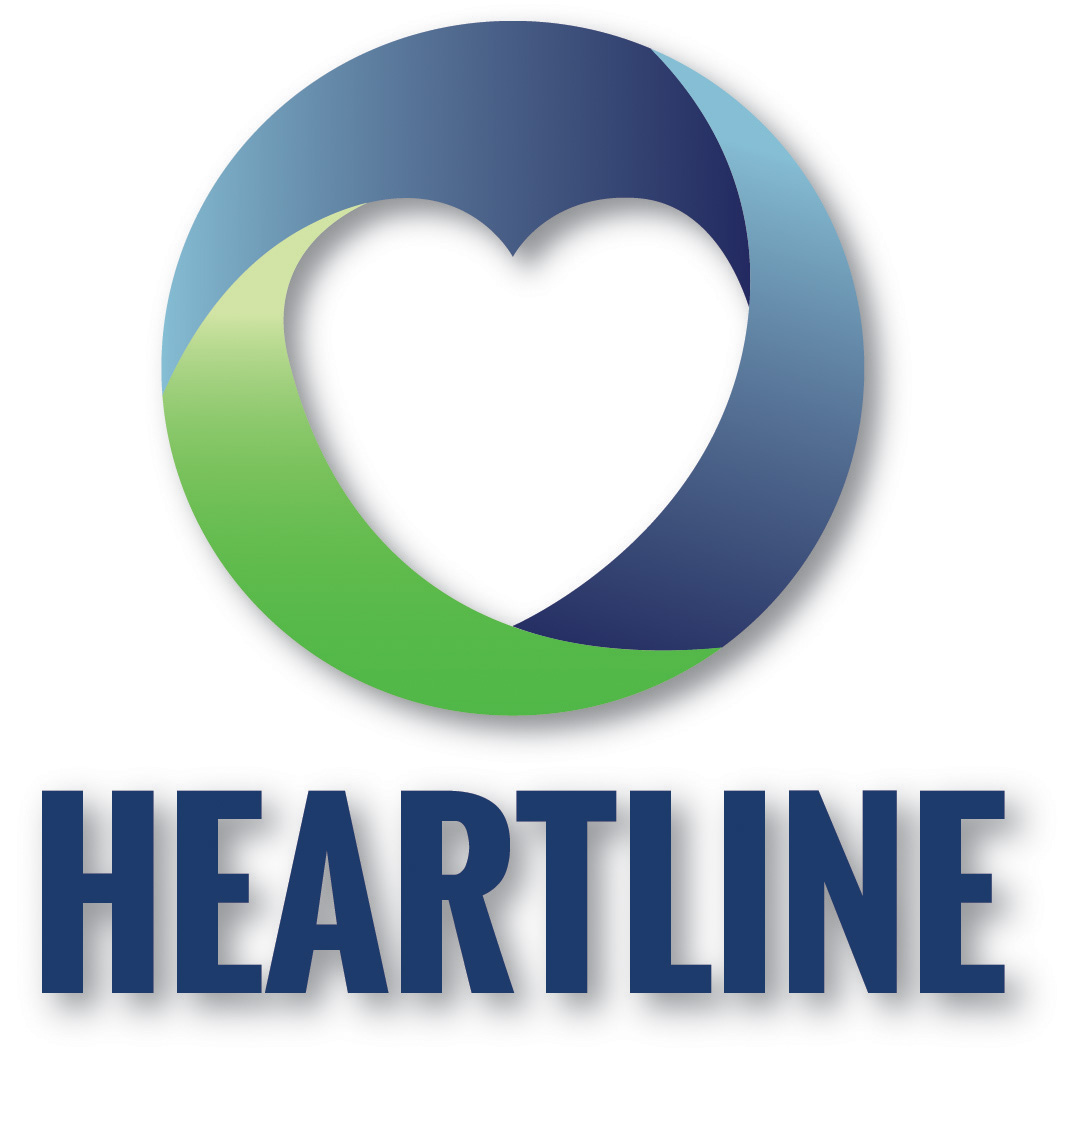 Heartline Introduces New Fatherhood Mentoring Program